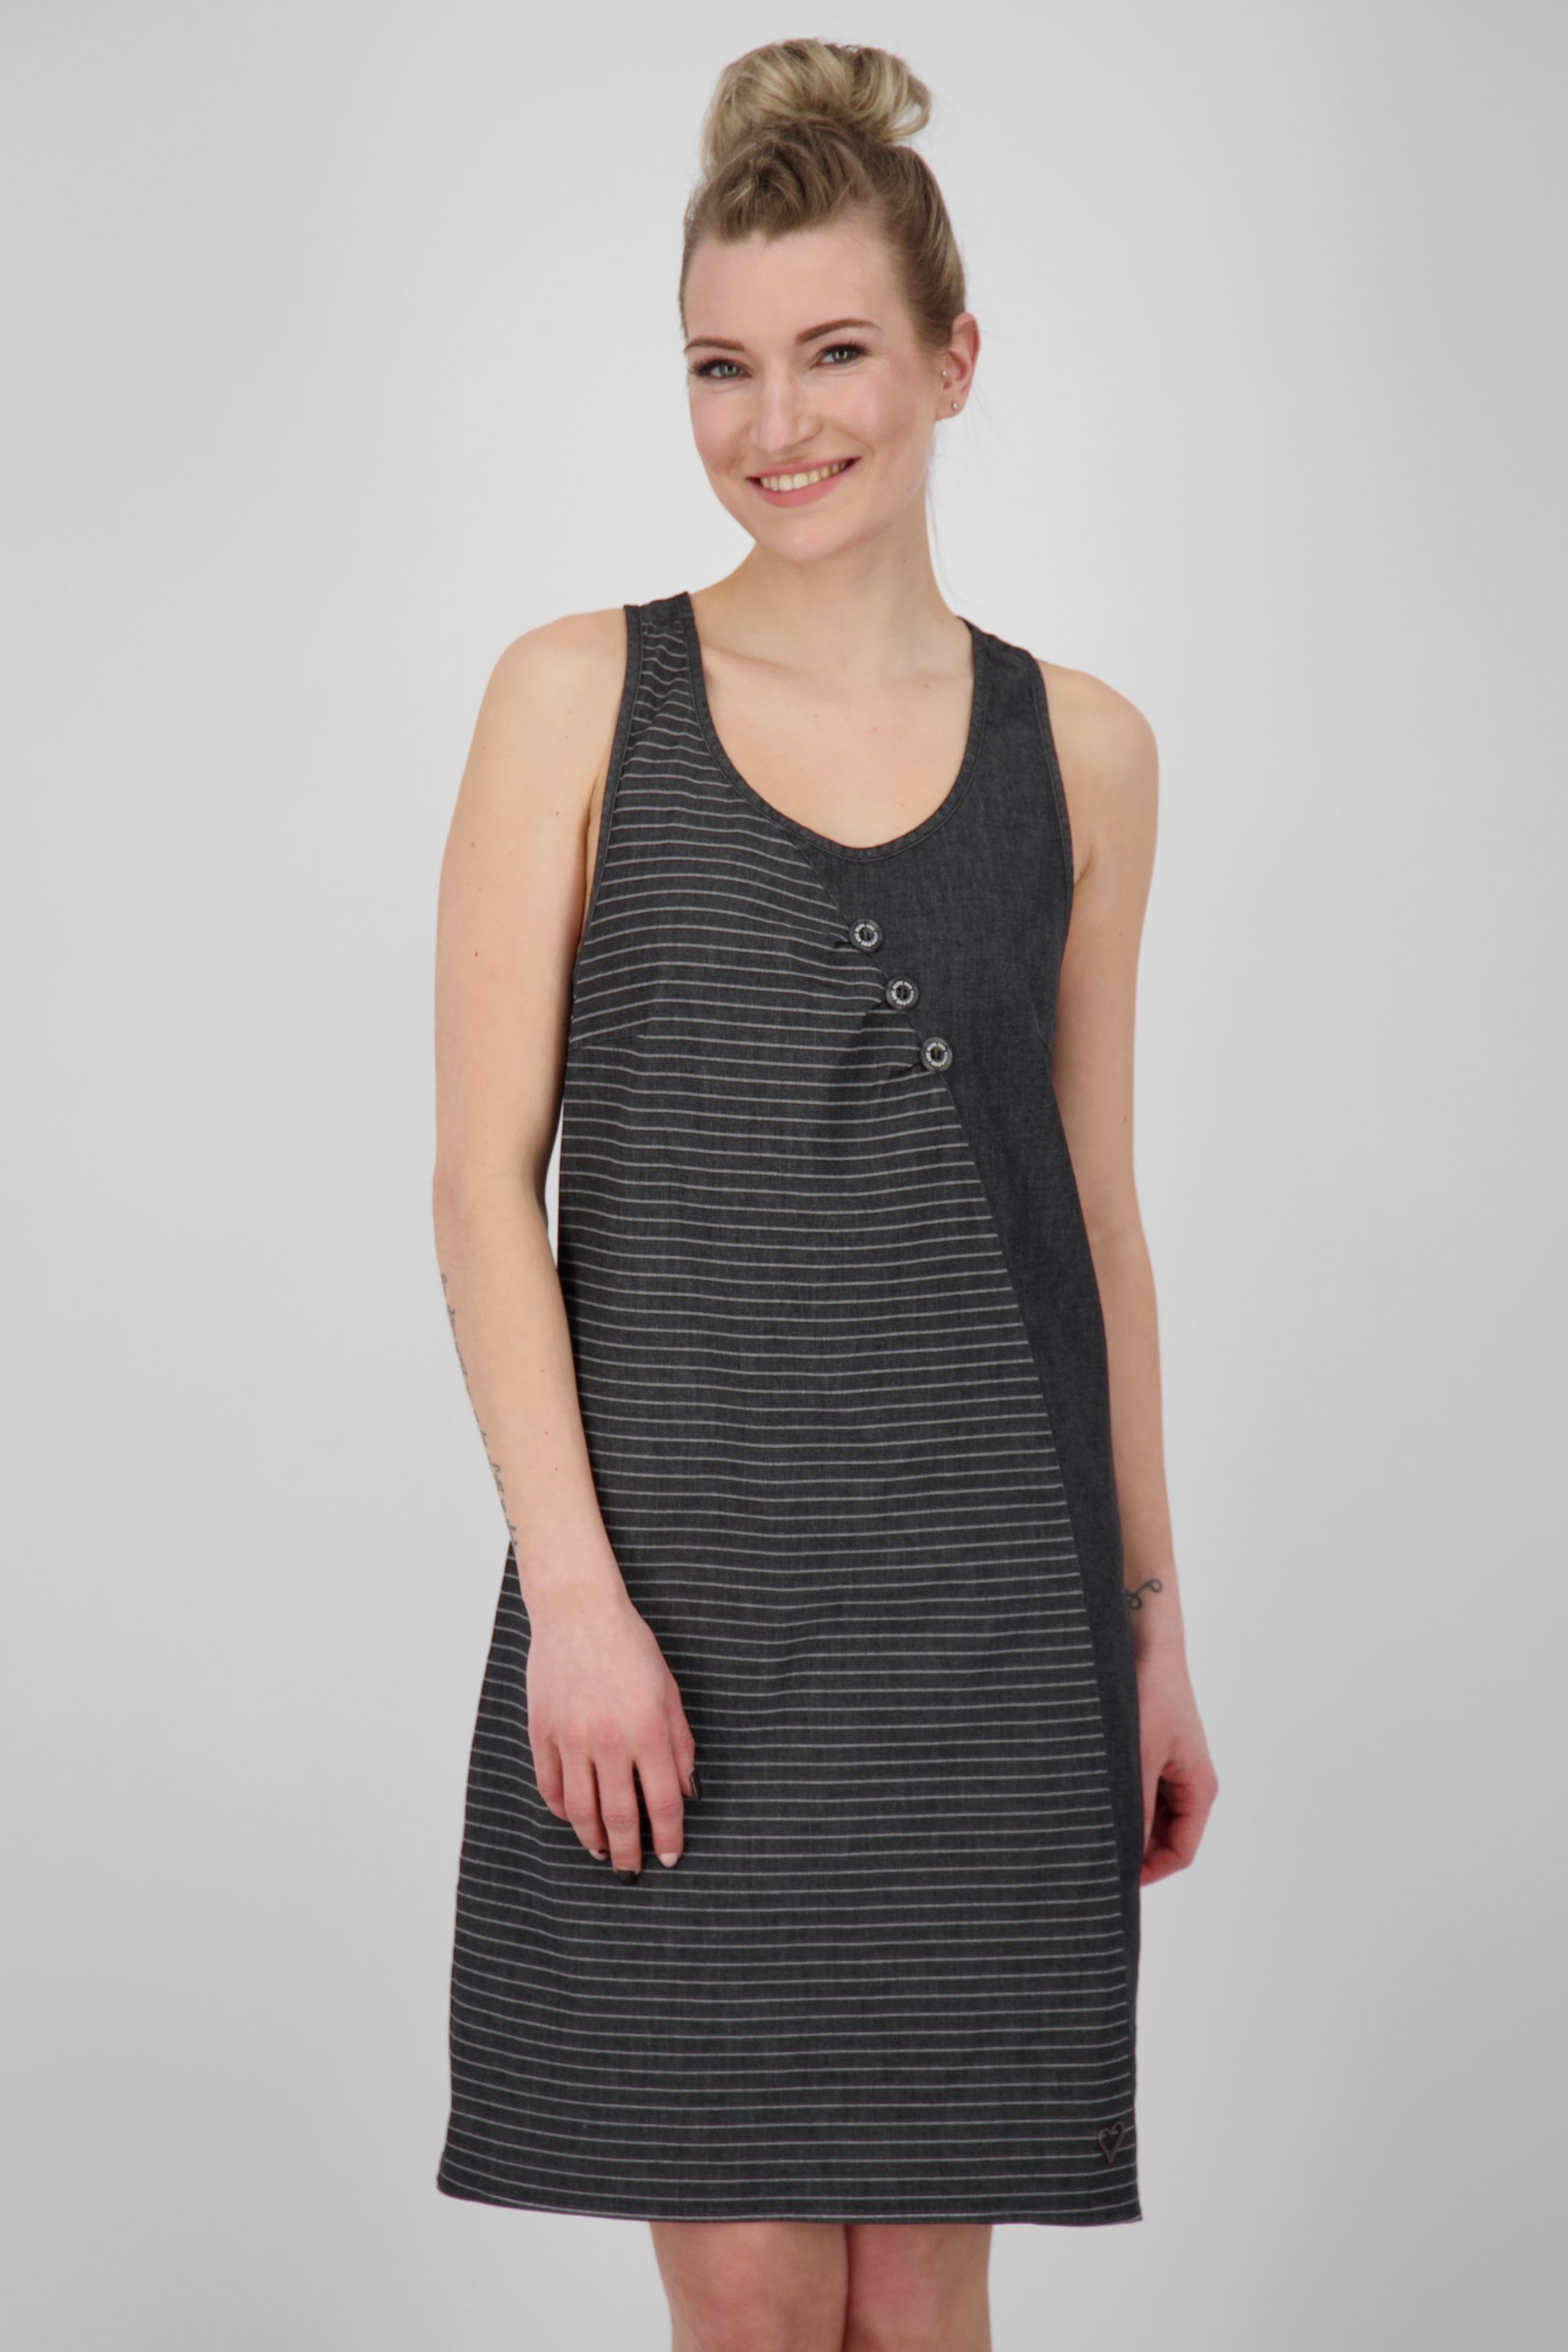 [Beliebtes Qualitätsprodukt!] Alife & Kickin Sommerkleid DNM Damen Sommerkleid, denim CameronAK black B Dress Kleid Top